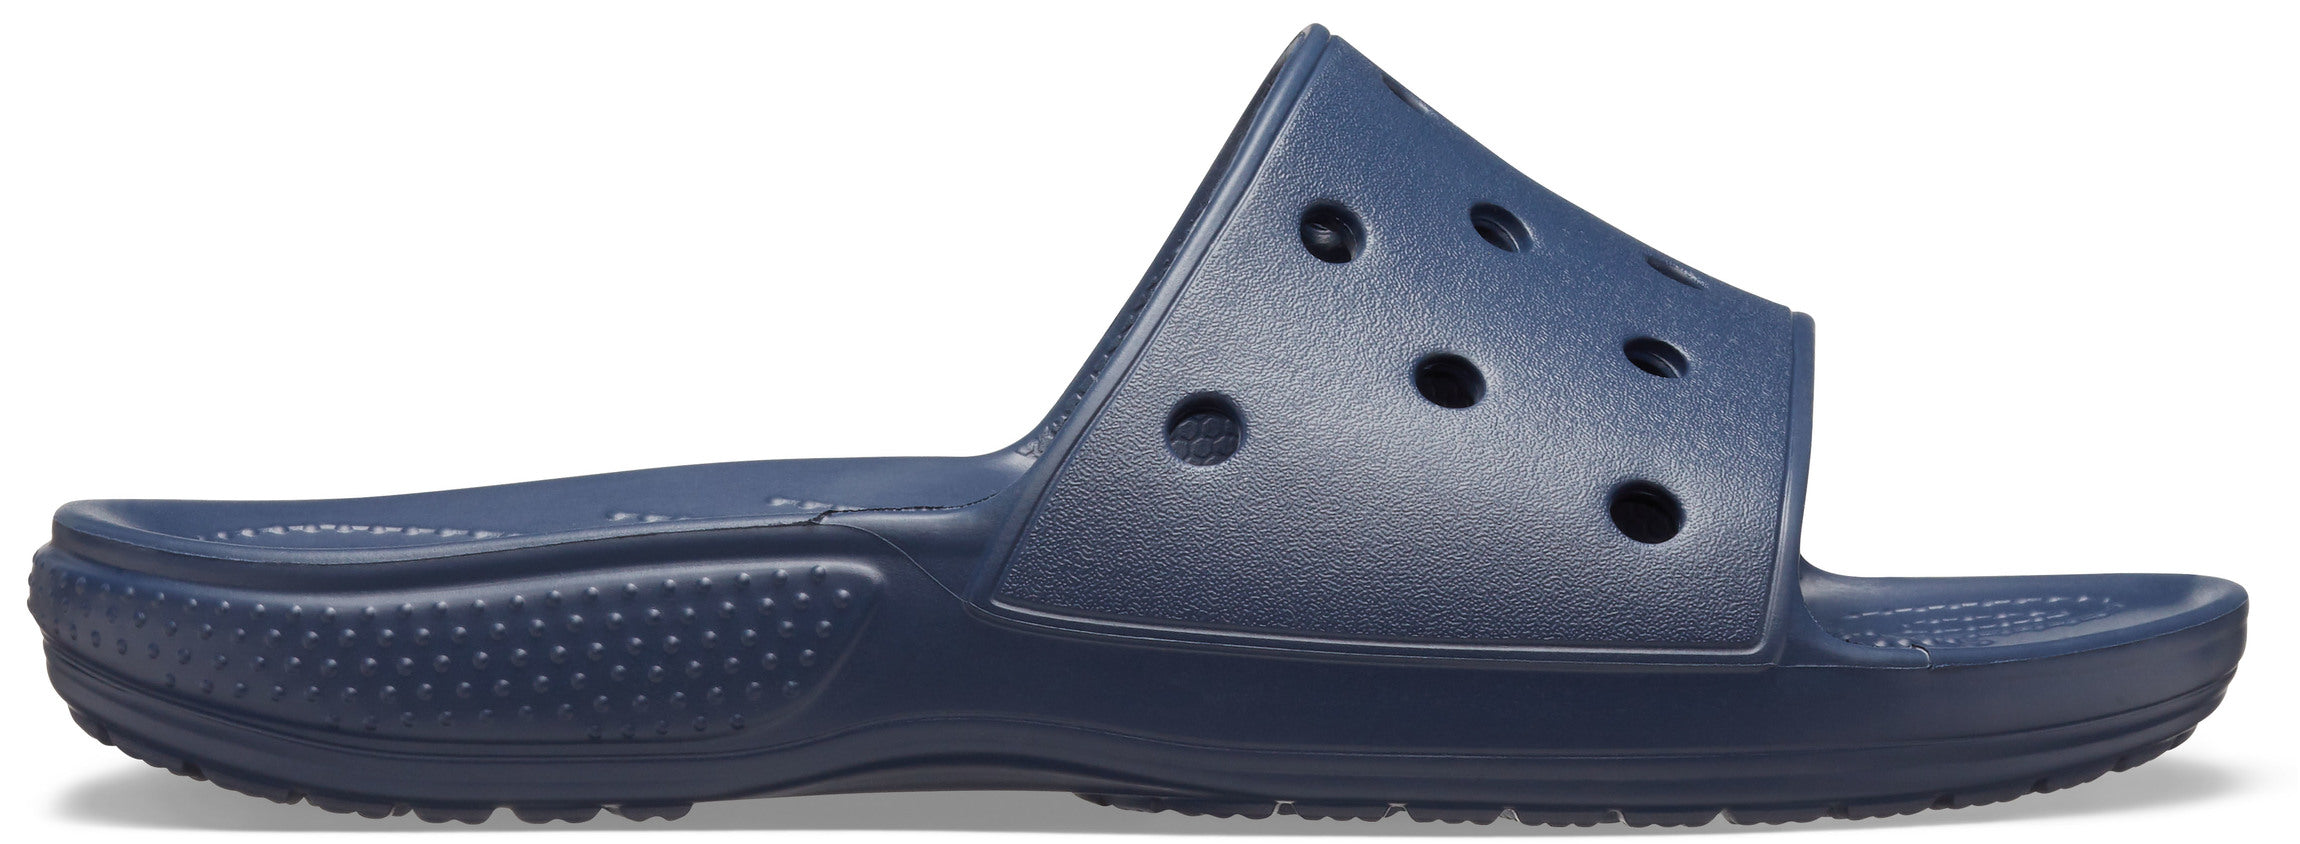 Classic Crocs Slide Navy